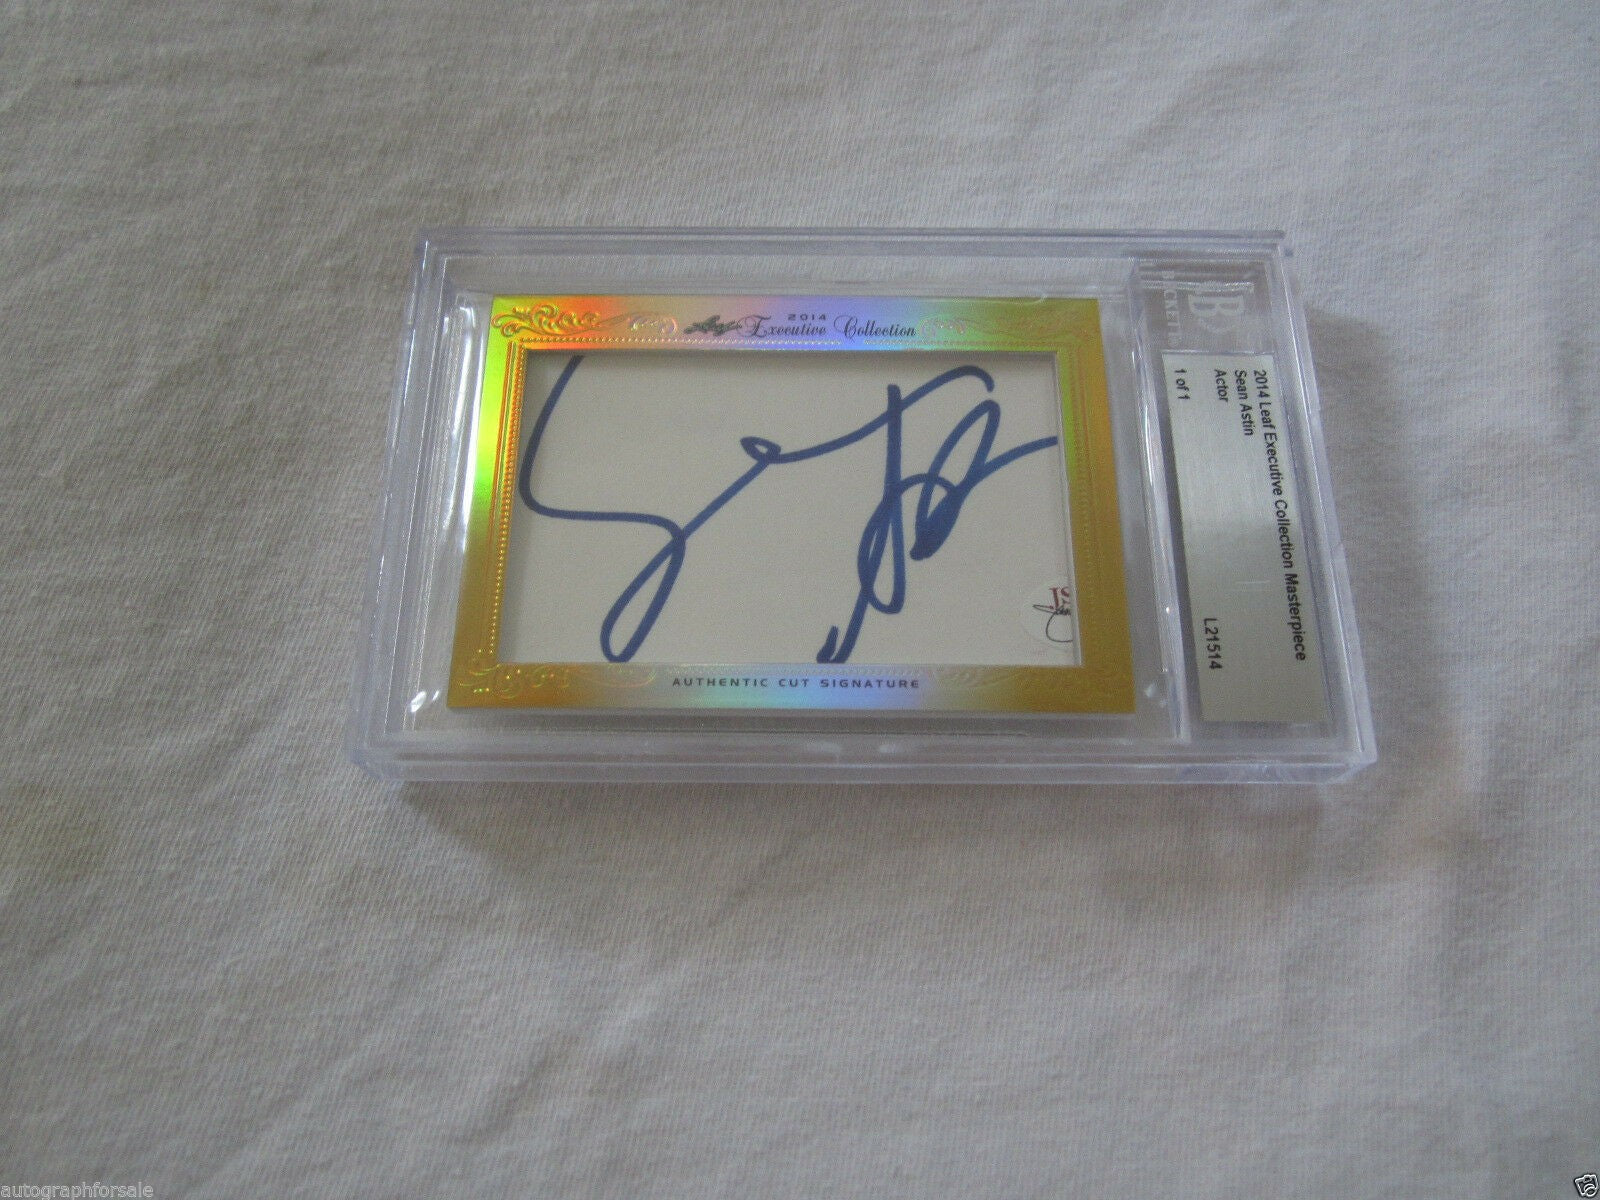 Sean Astin 2014 Leaf Masterpiece Cut Signature certified autograph card 1/1 LOTR Rudy